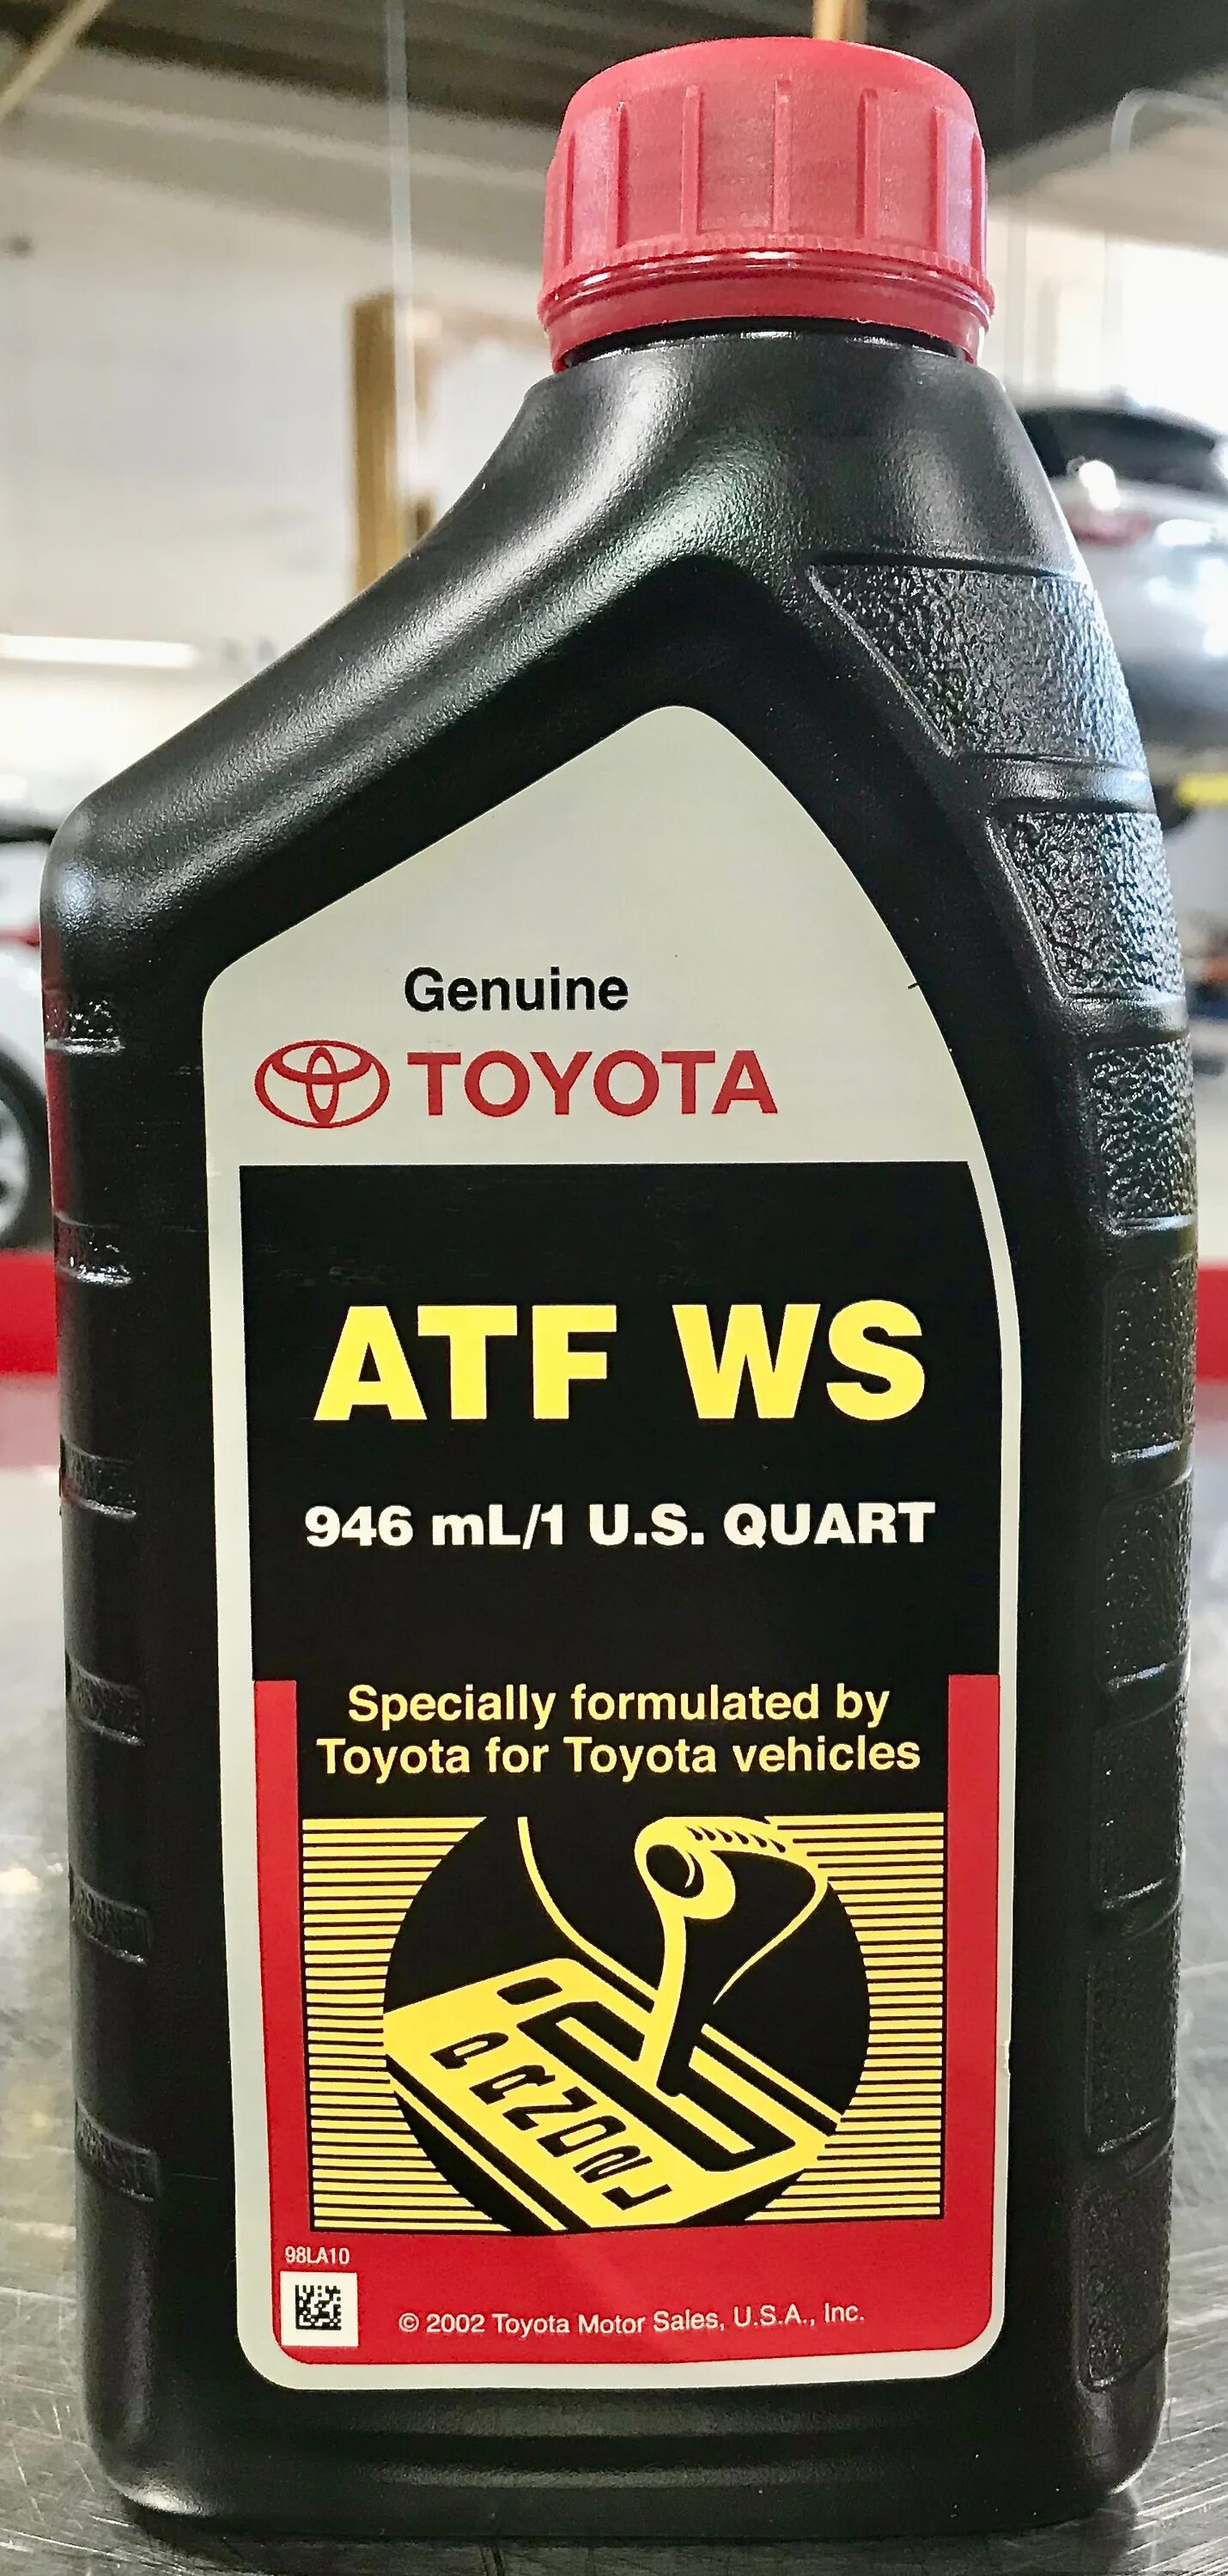 Genuine atf. Toyota ATF WS. ATF Toyota WS JWS 3324. Toyota Genuine ATF WS. Toyota WS масло для АКПП.